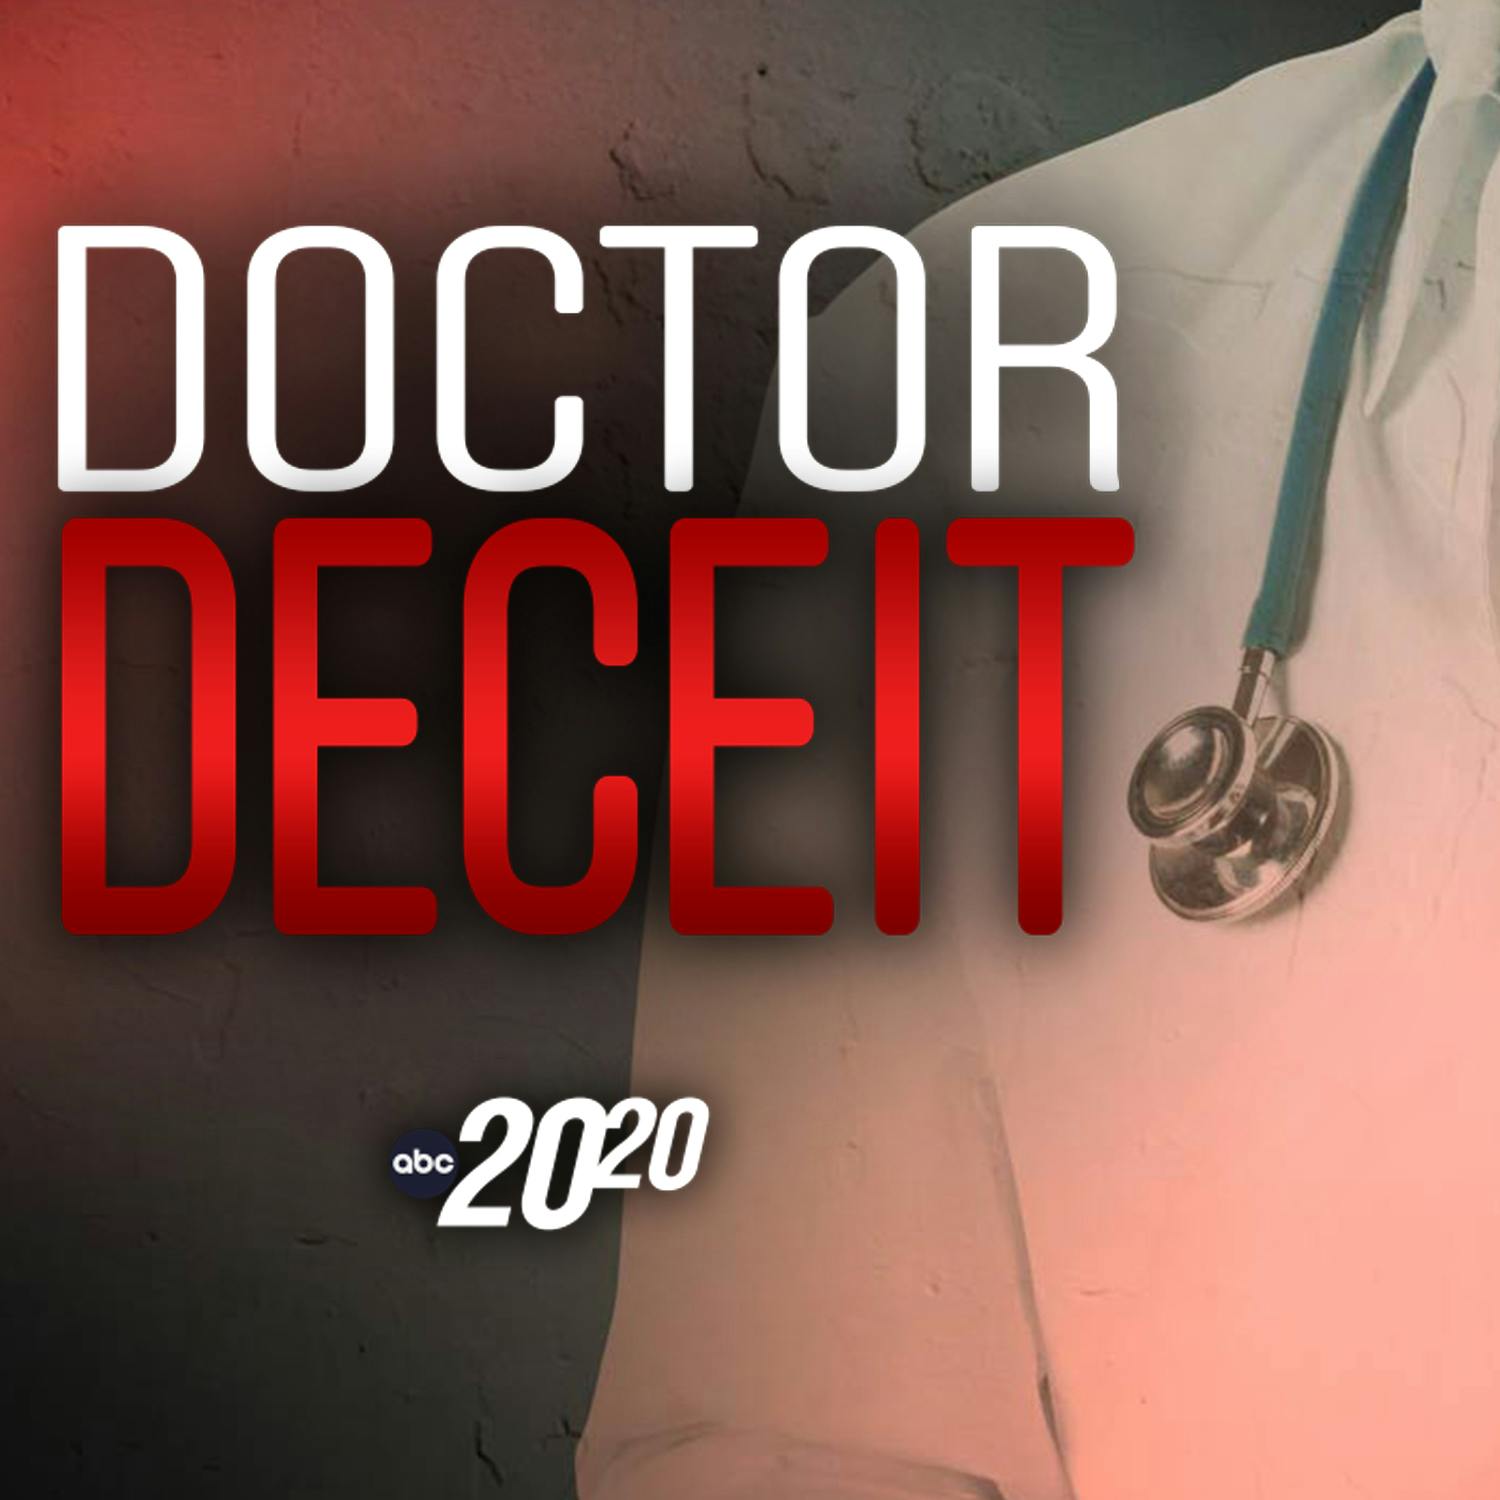 Doctor Deceit